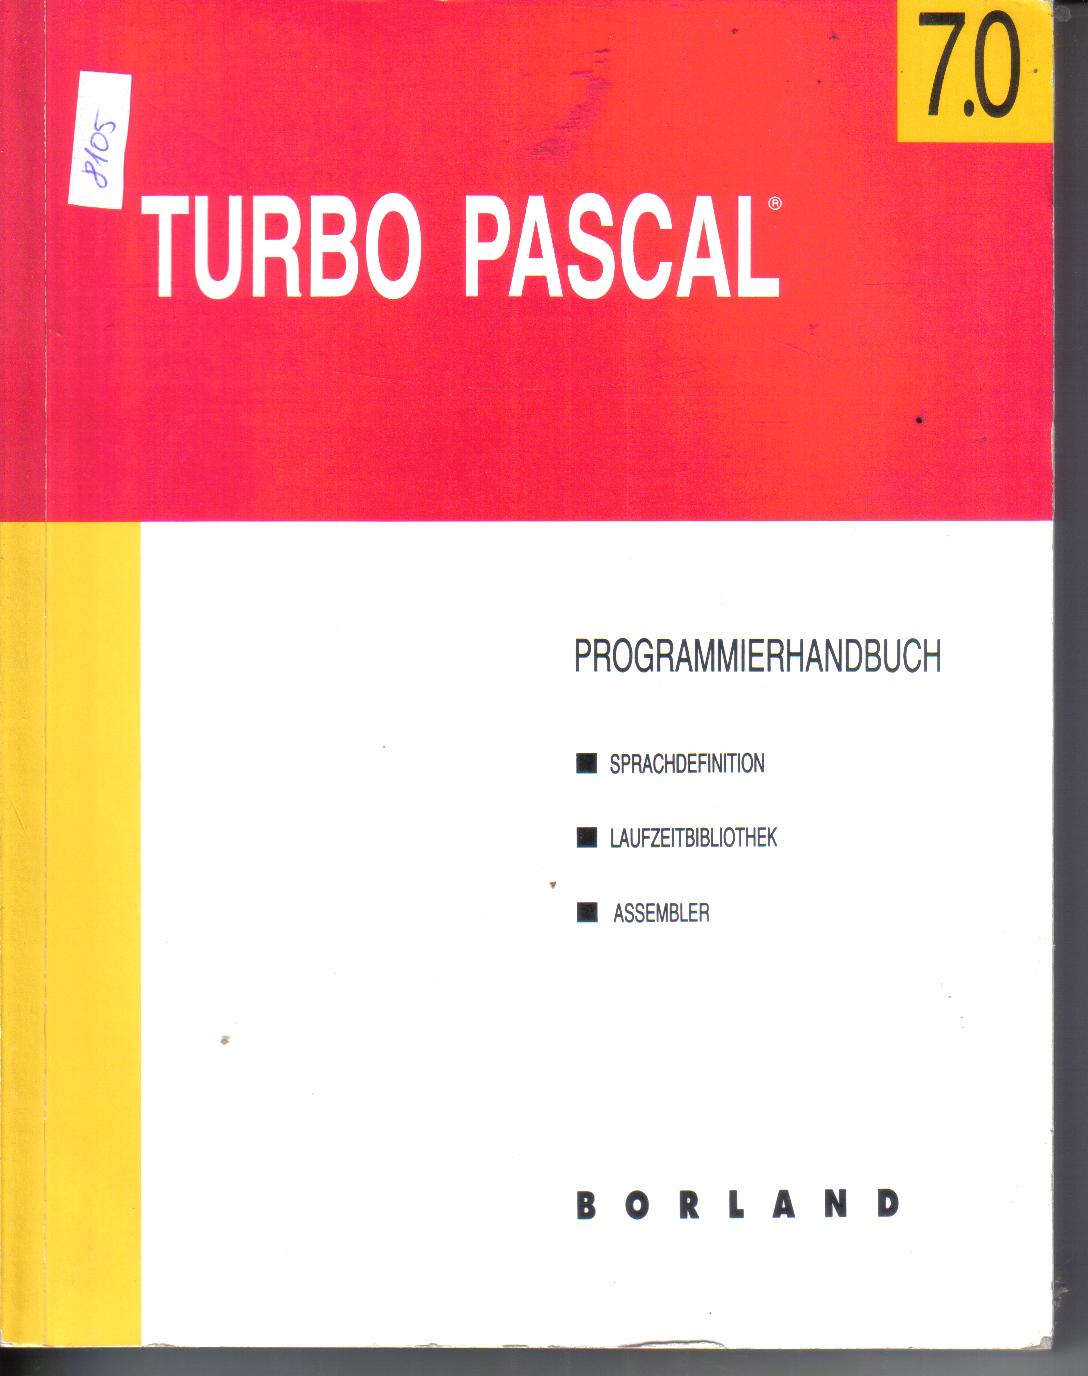 Turbo Pascal 7.0 Programmierhandbuch